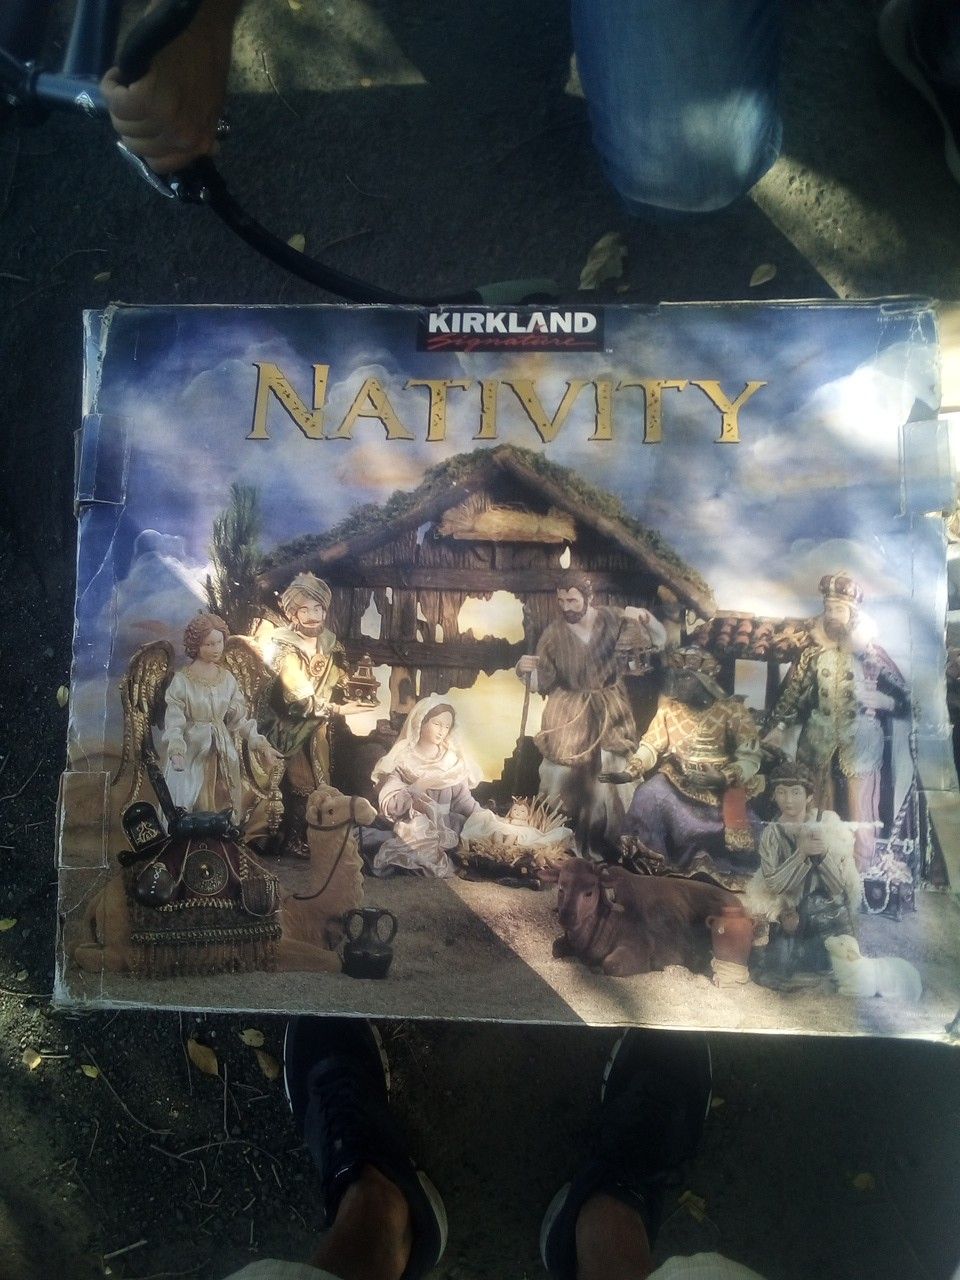 Kirkland signature nativity set